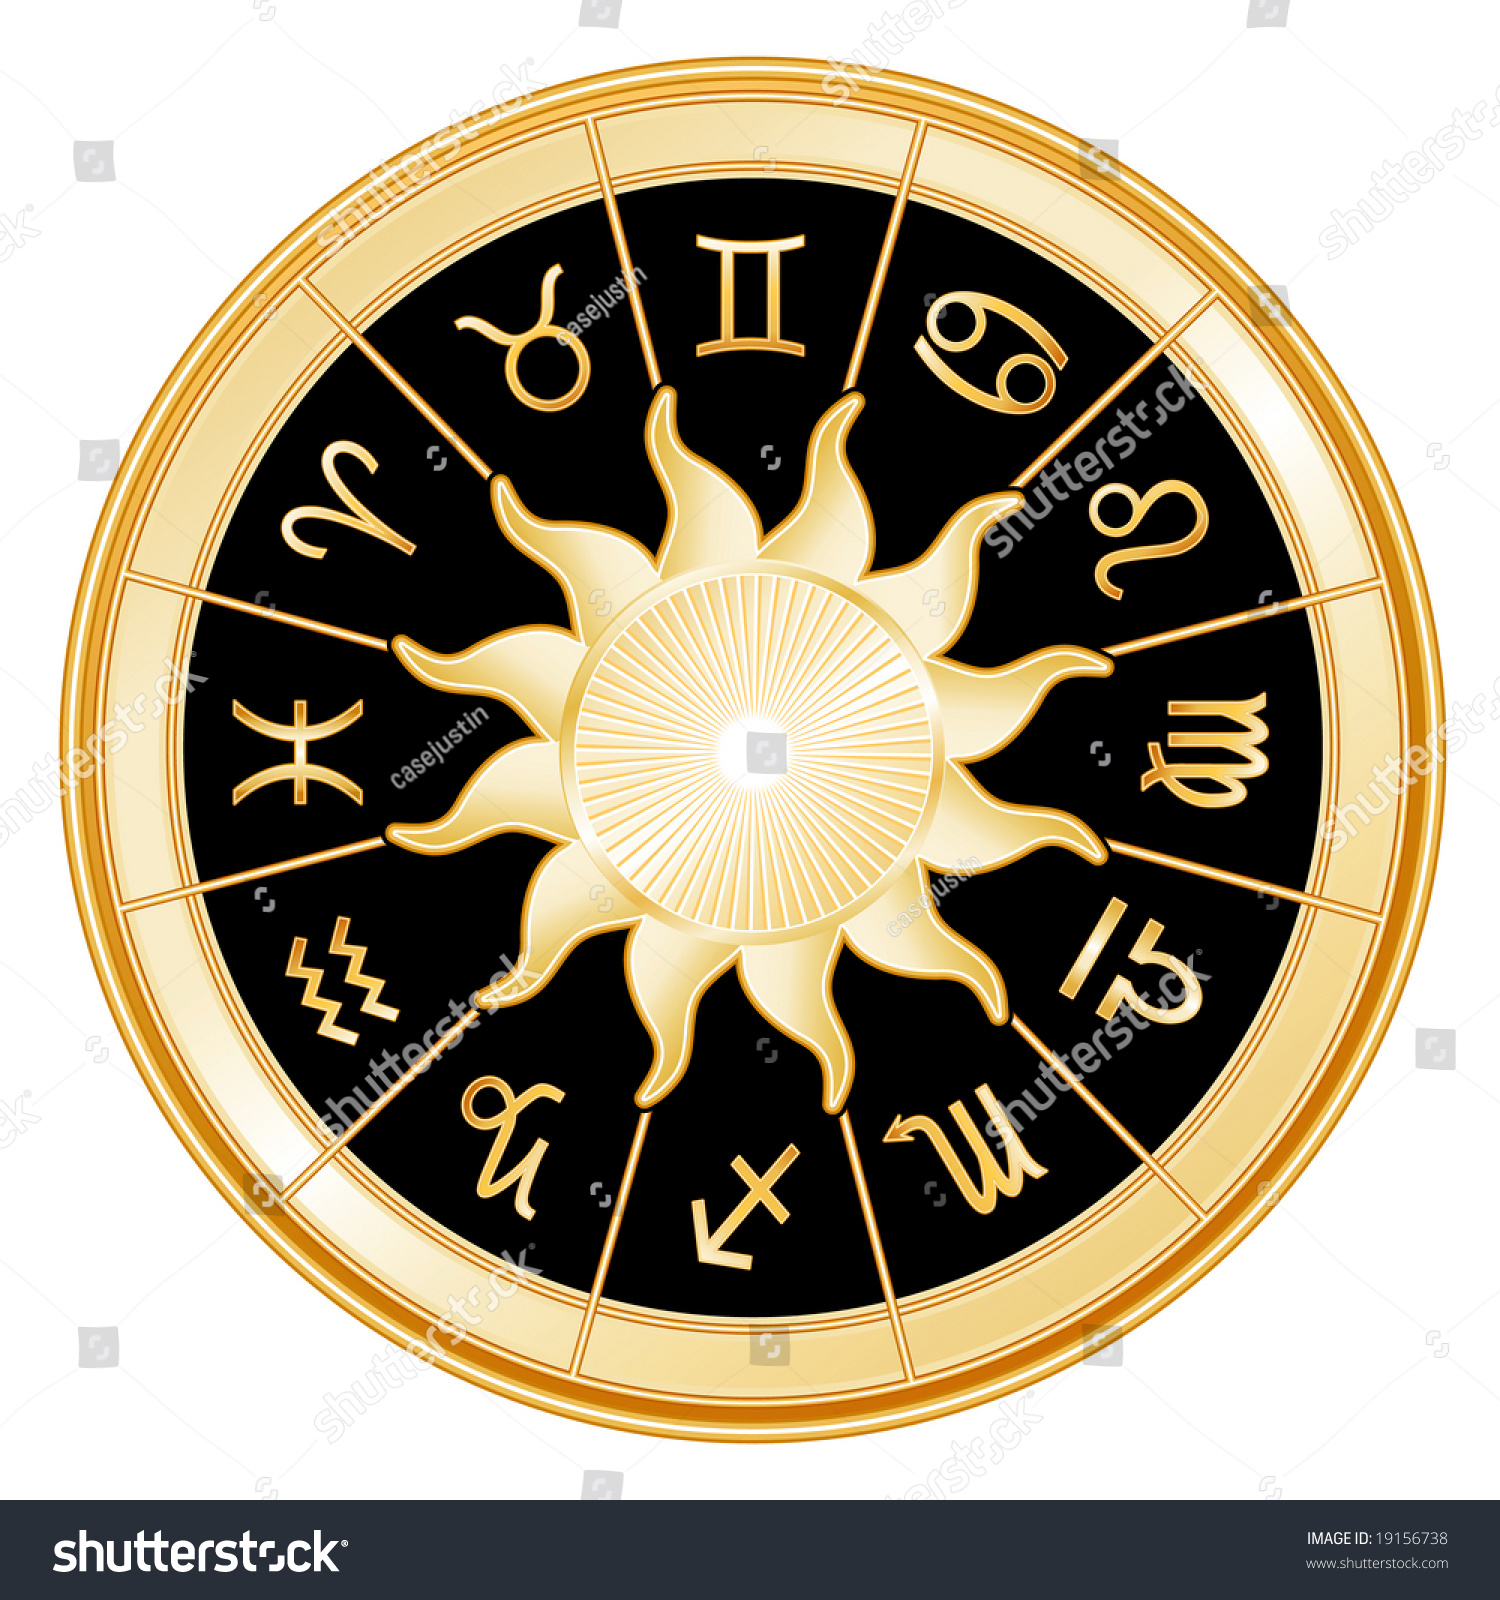 Horoscope Signs Zodiac 12 Astrology Symbols Stock Illustration 19156738 - Shutterstock1500 x 1600